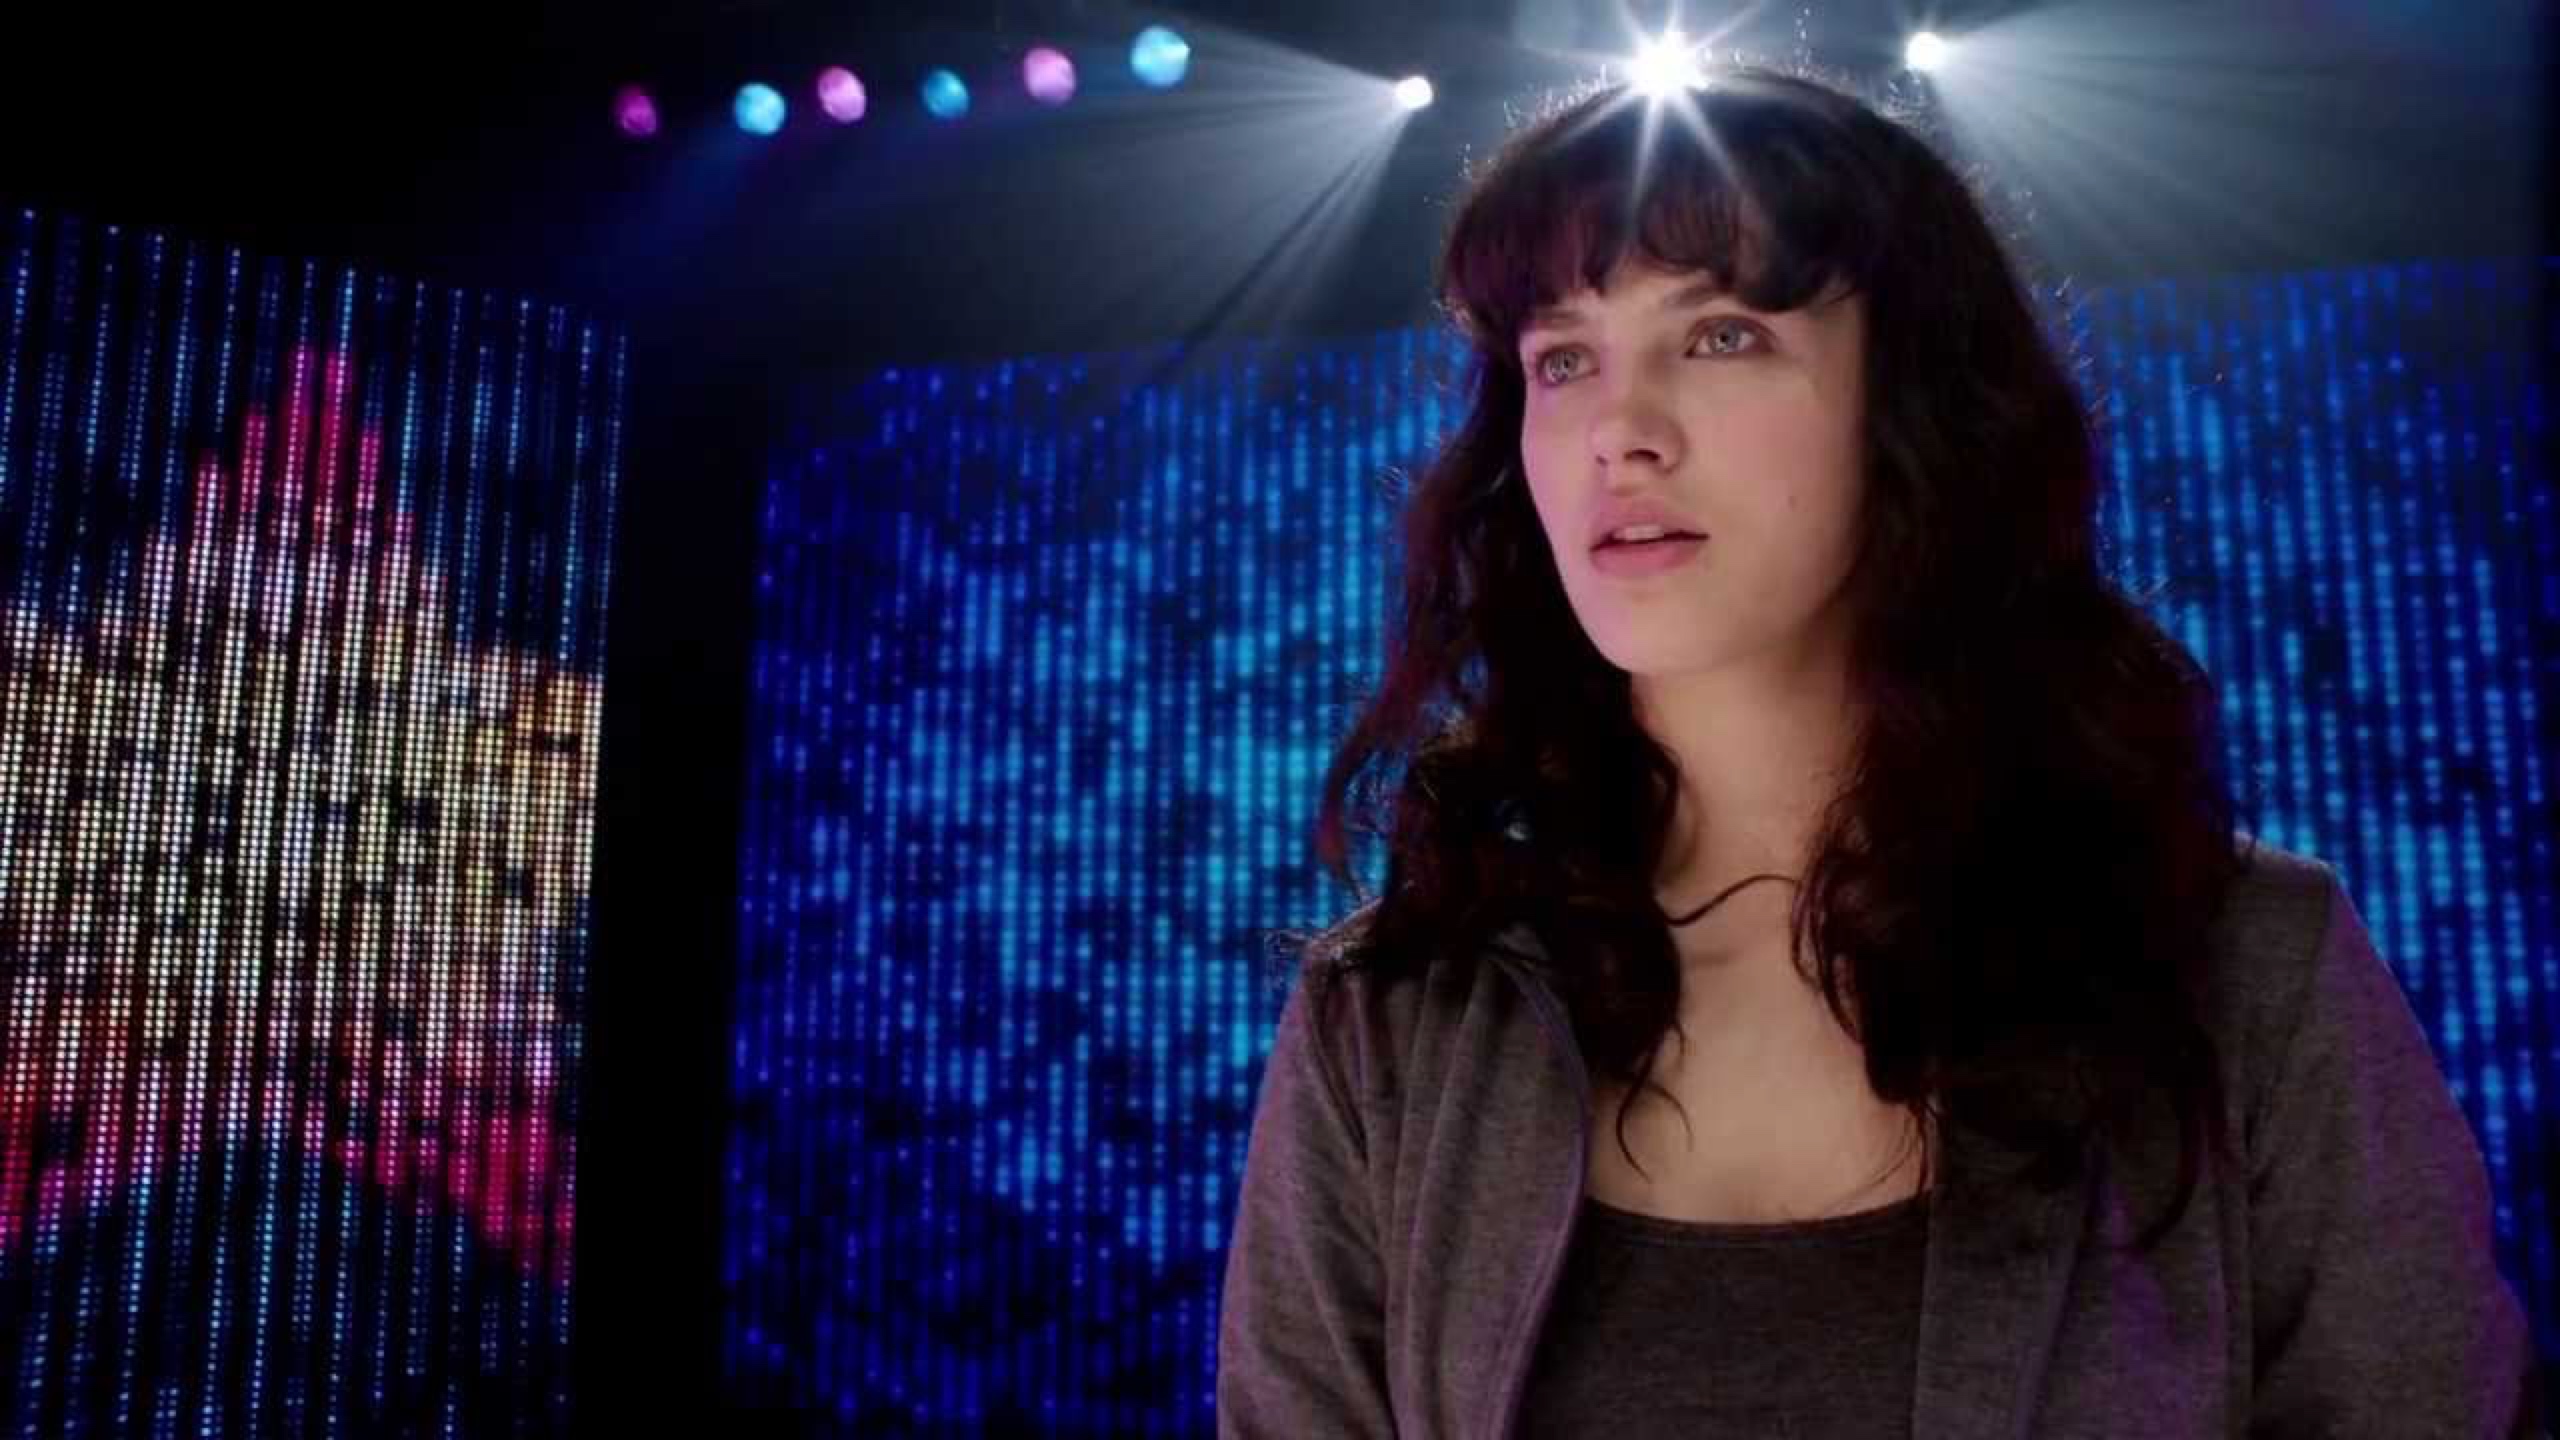 Jessica Brown Findlay in "Black Mirror's" "Fifteen Million Merits" (Photo: Netflix)